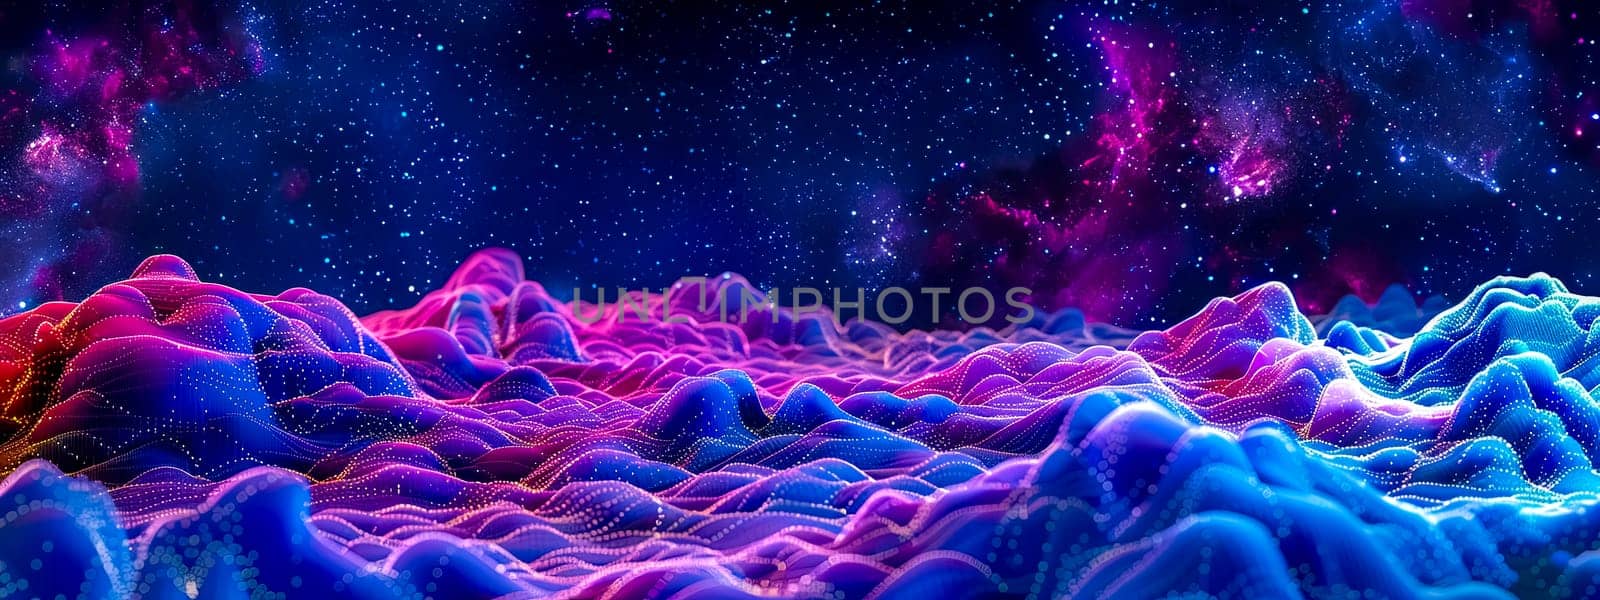 Vibrant digital landscape with stars and nebulae by Edophoto